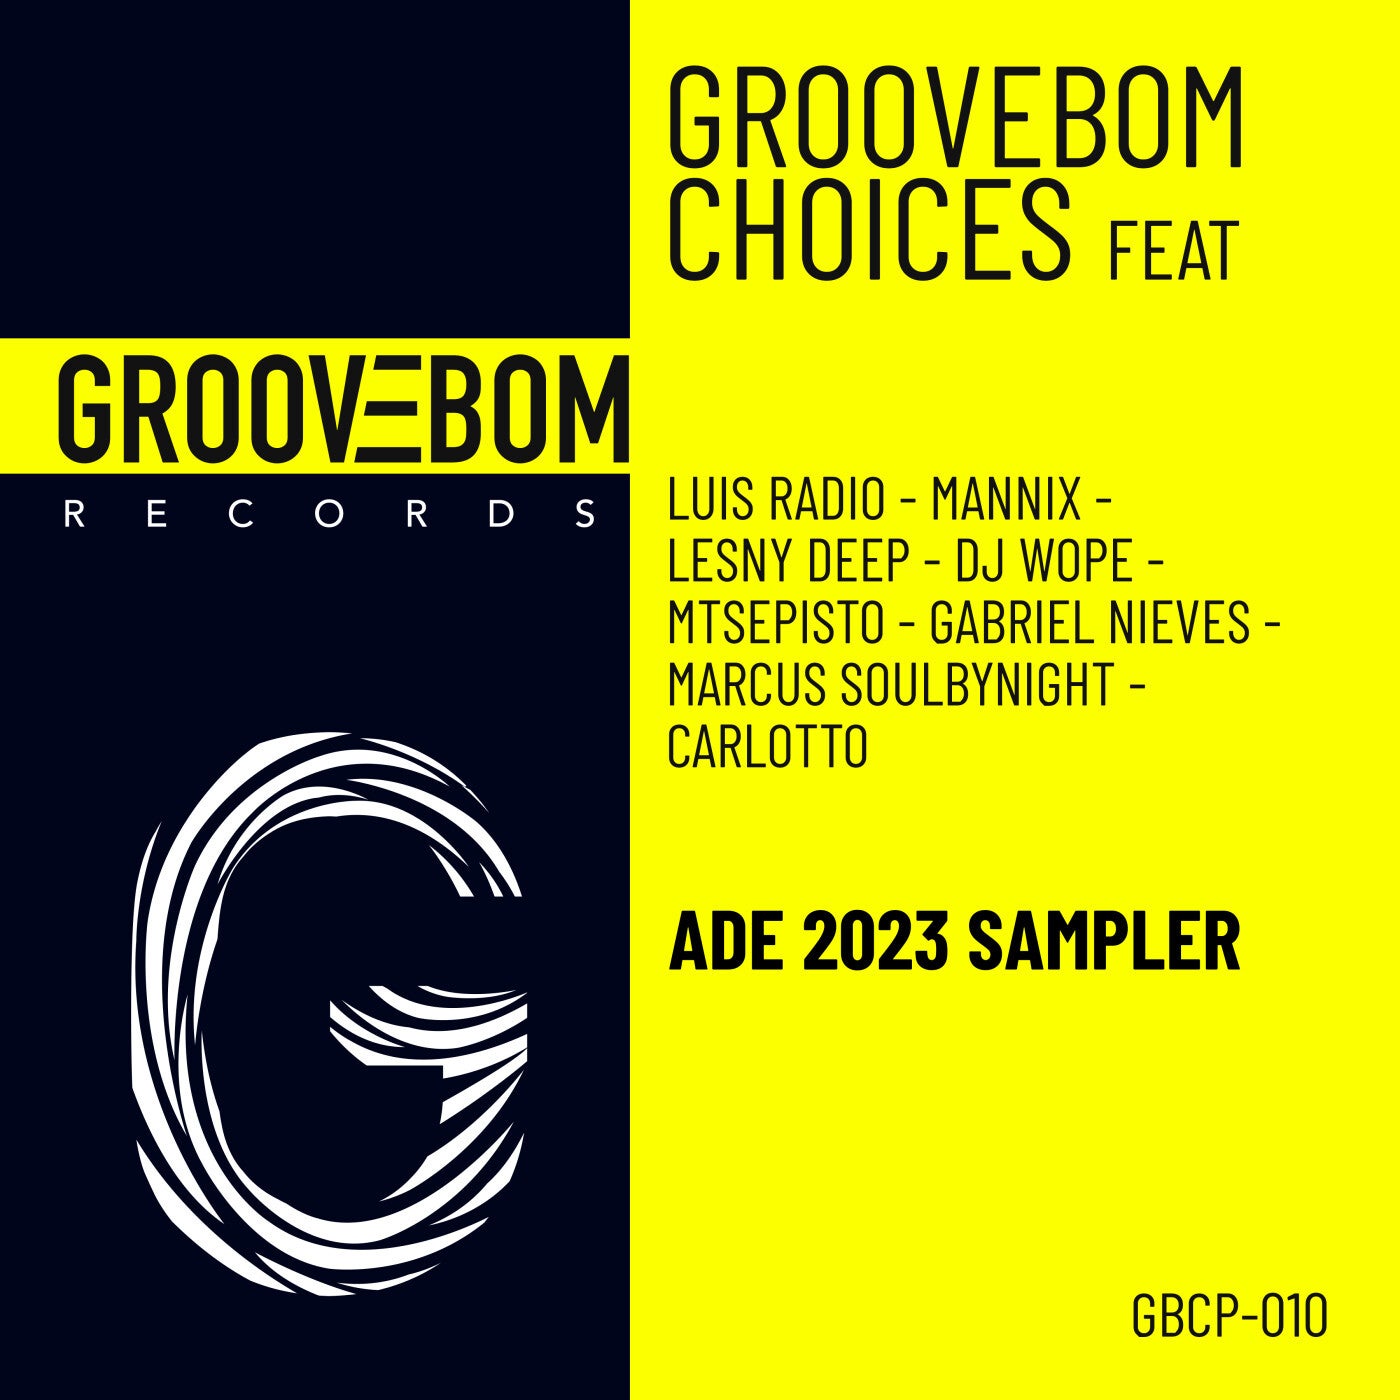 Groovebom Choices - ADE 2023 Sampler